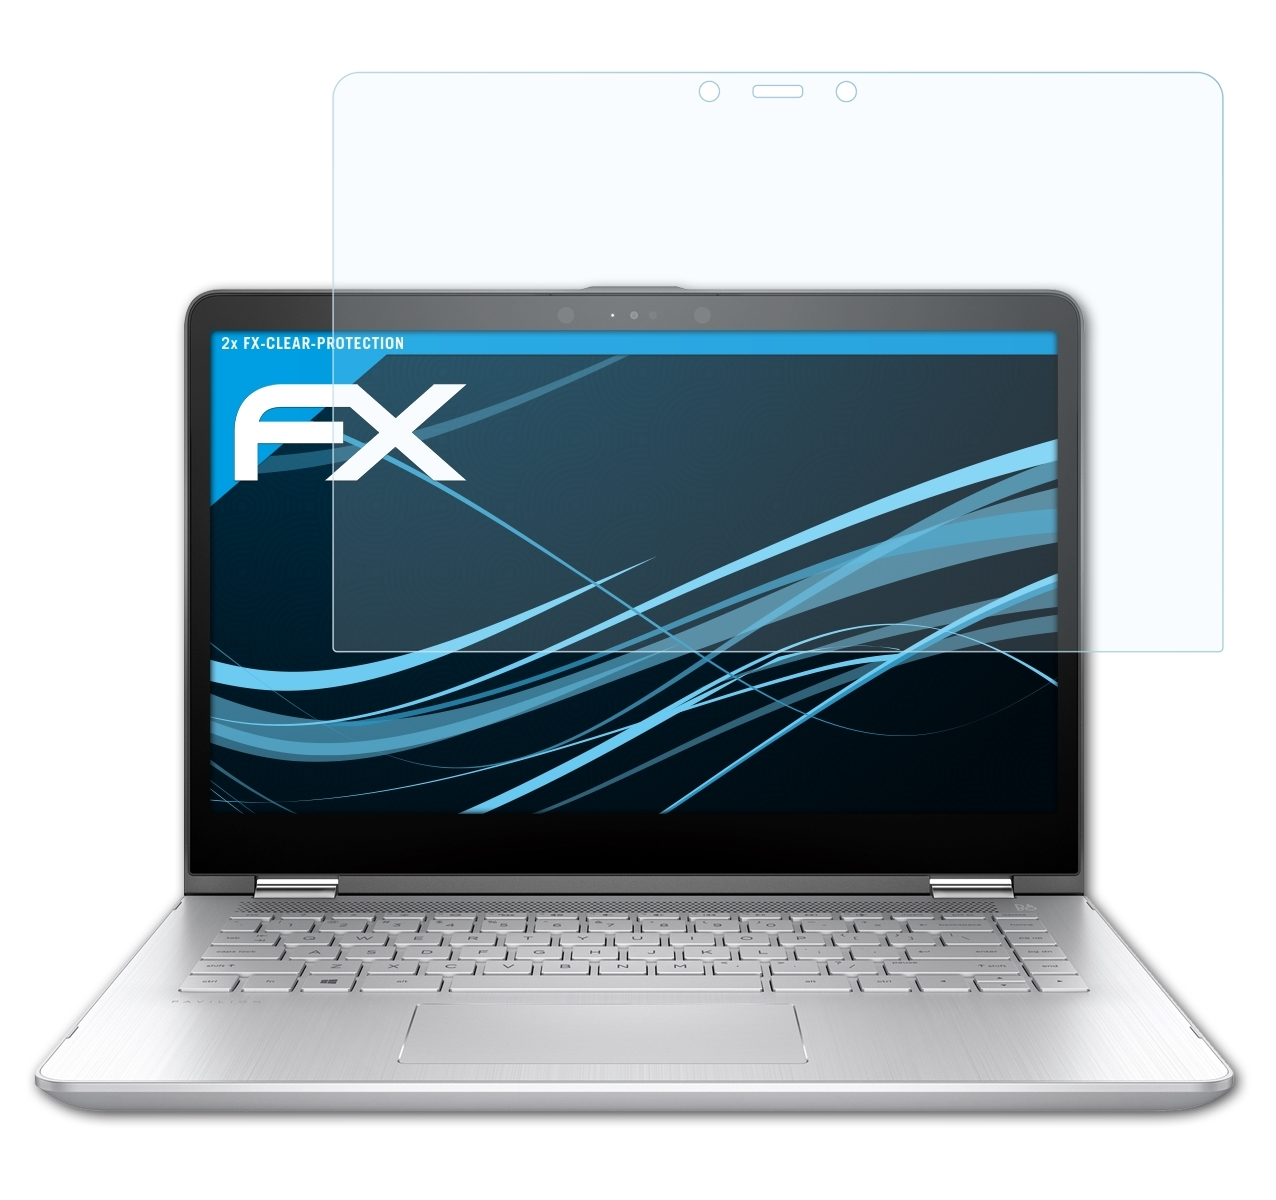 ATFOLIX 2x Pavilion Displayschutz(für FX-Clear 14-ba019ng) HP x360